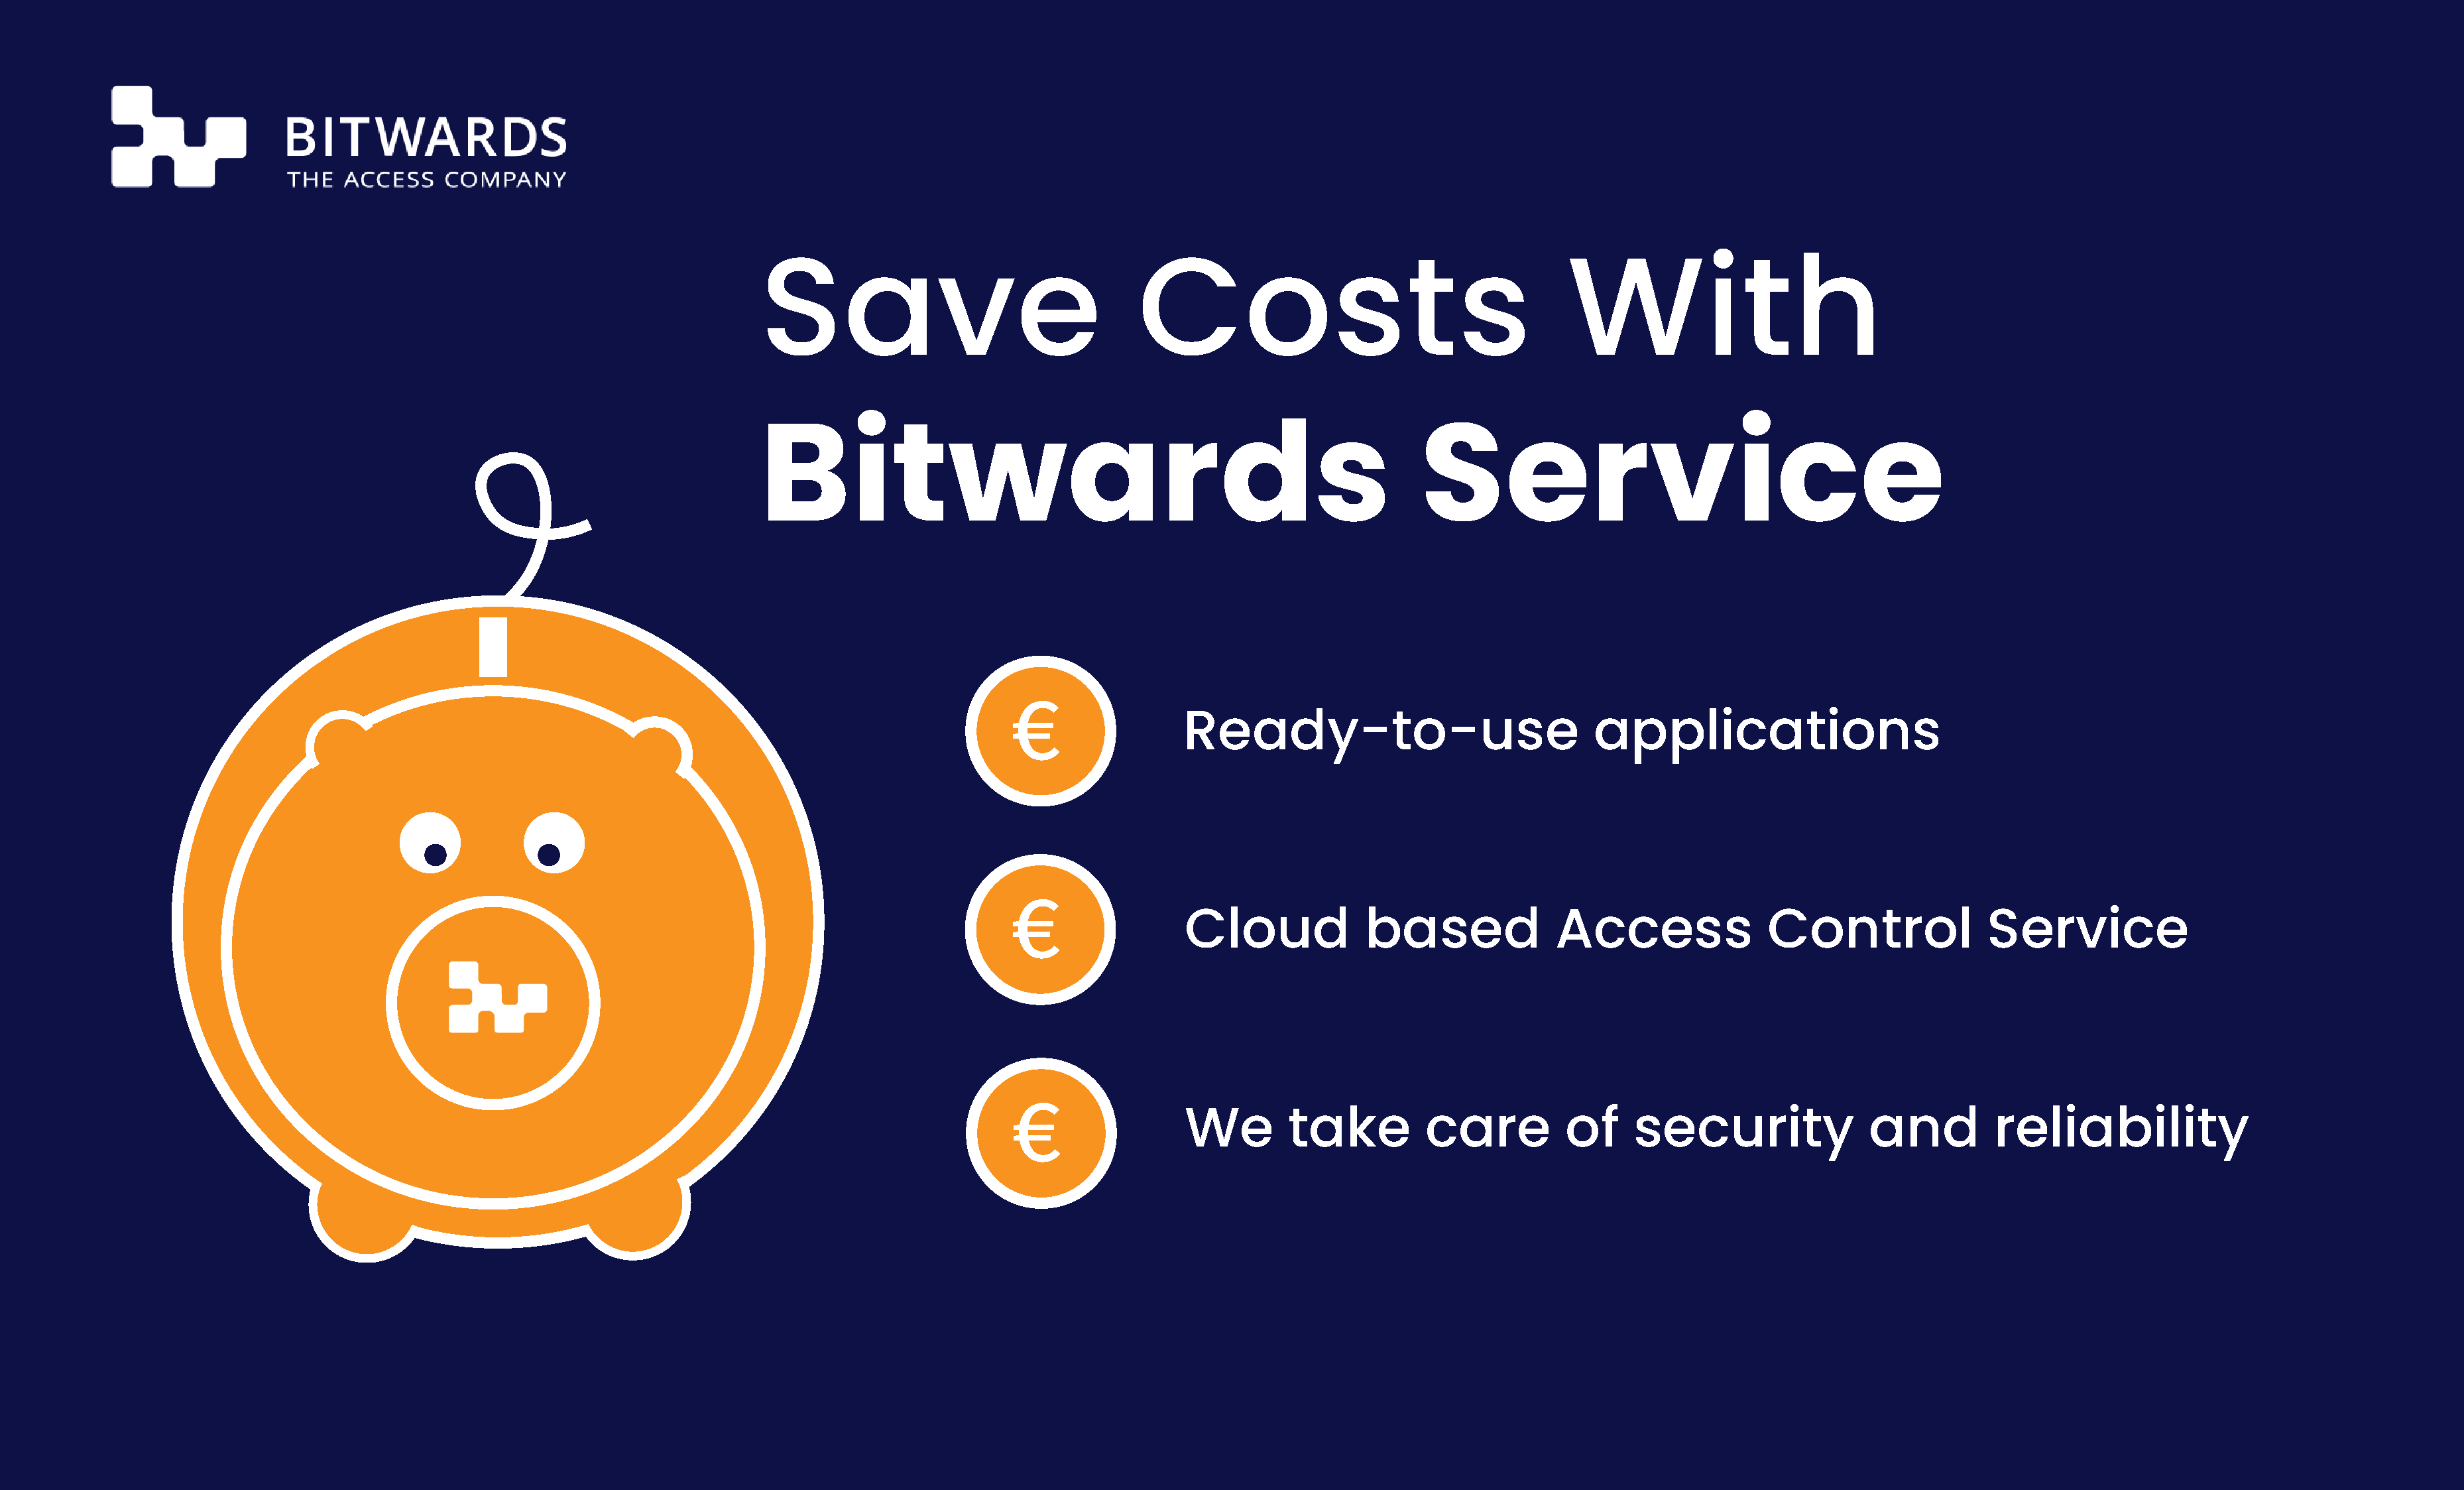 Bitwards-service-saves-costs